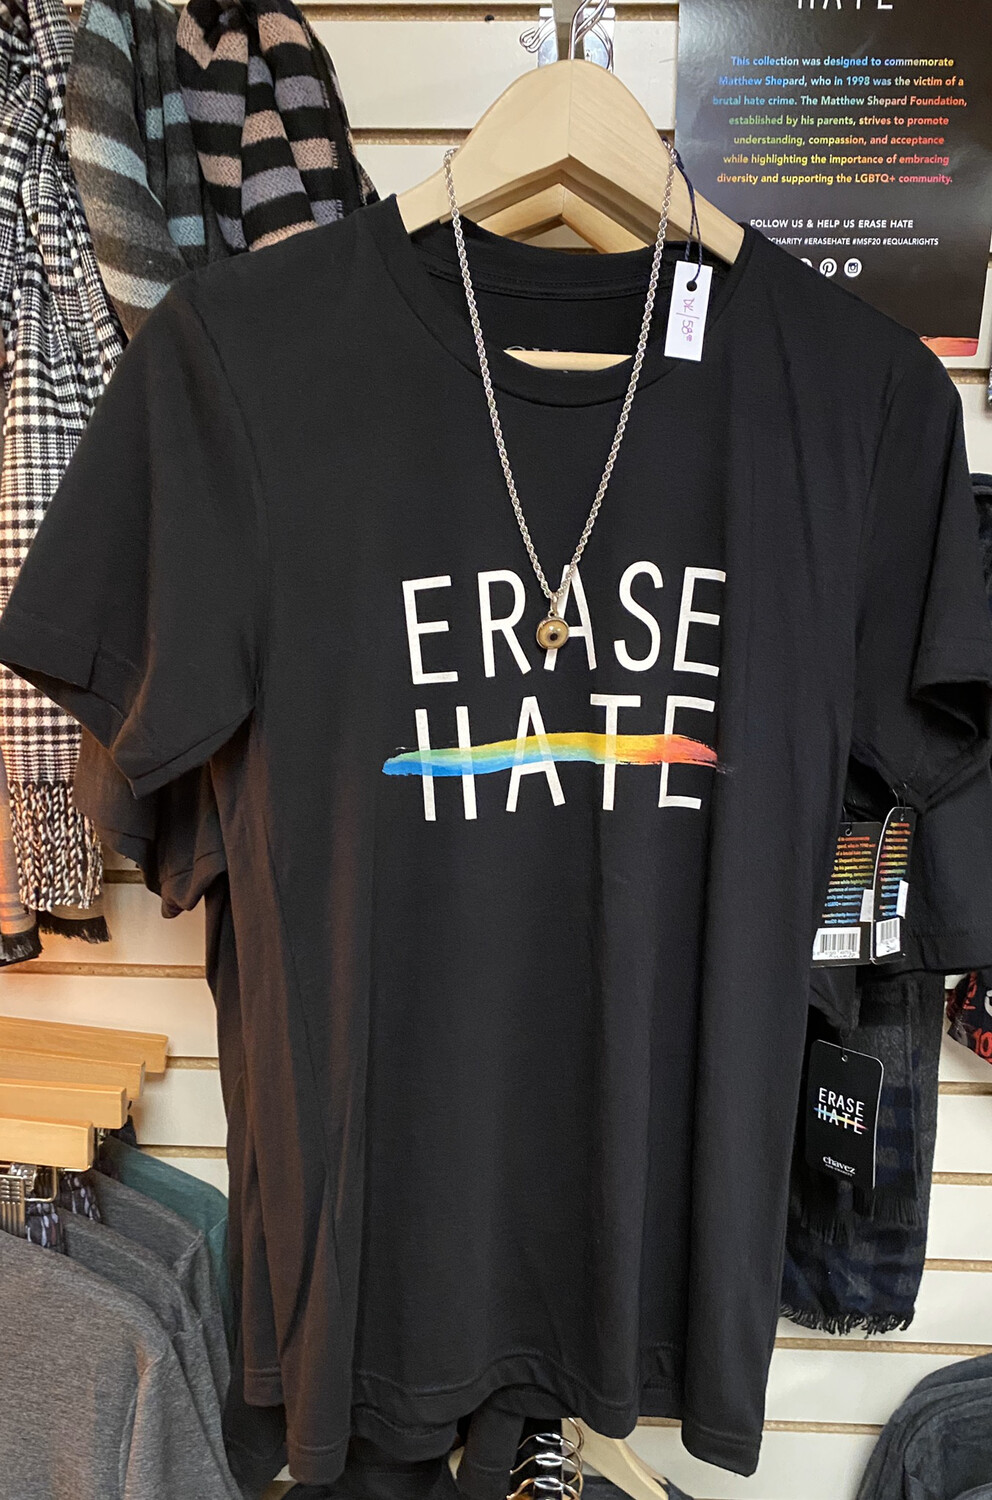 Erase Hate Size XL. Helps The Mathew Shepard Foundation 